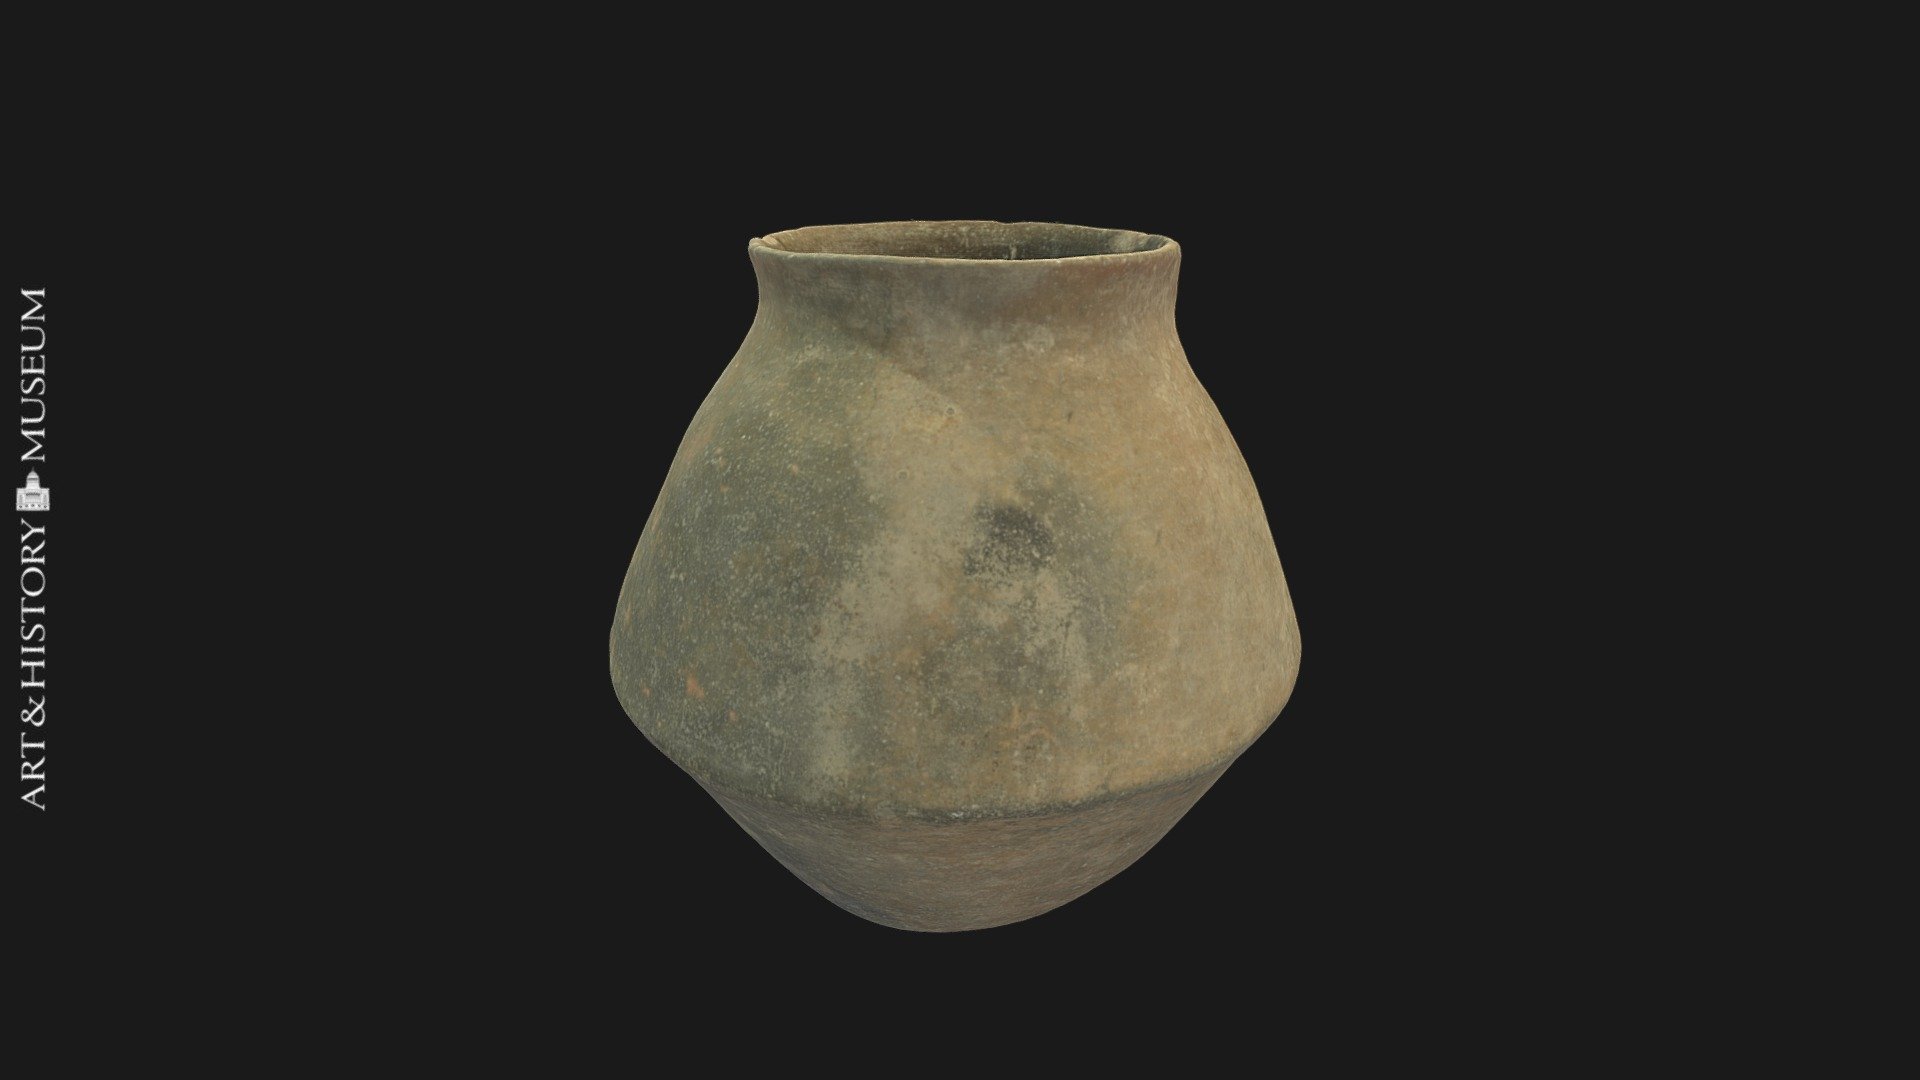 Carinated vase with flaring rim - PG.41.1.205